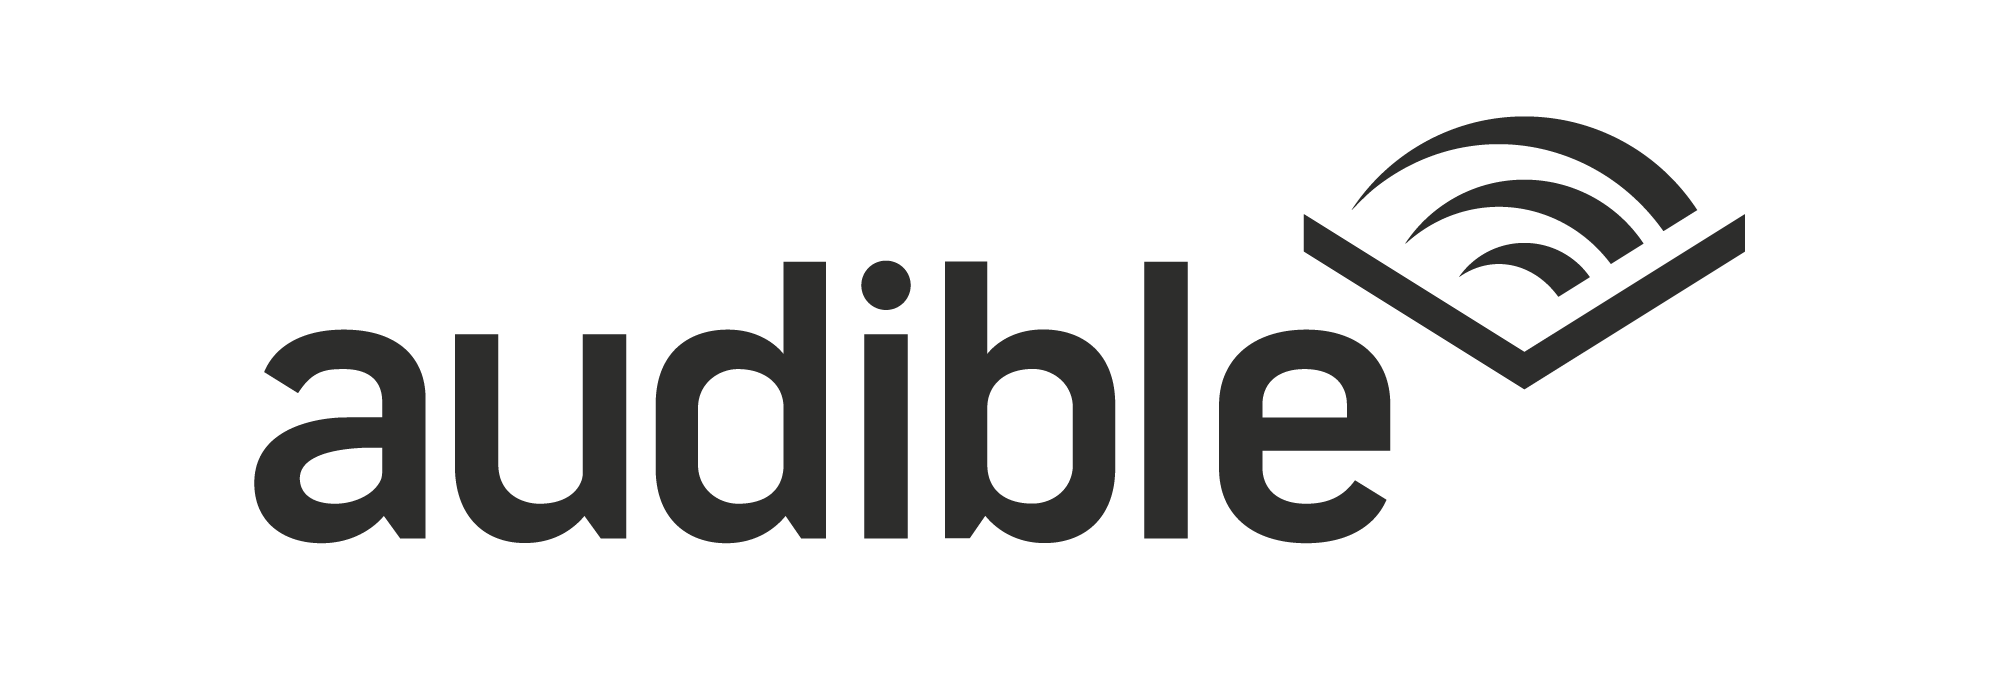 Audible Black and White Logo